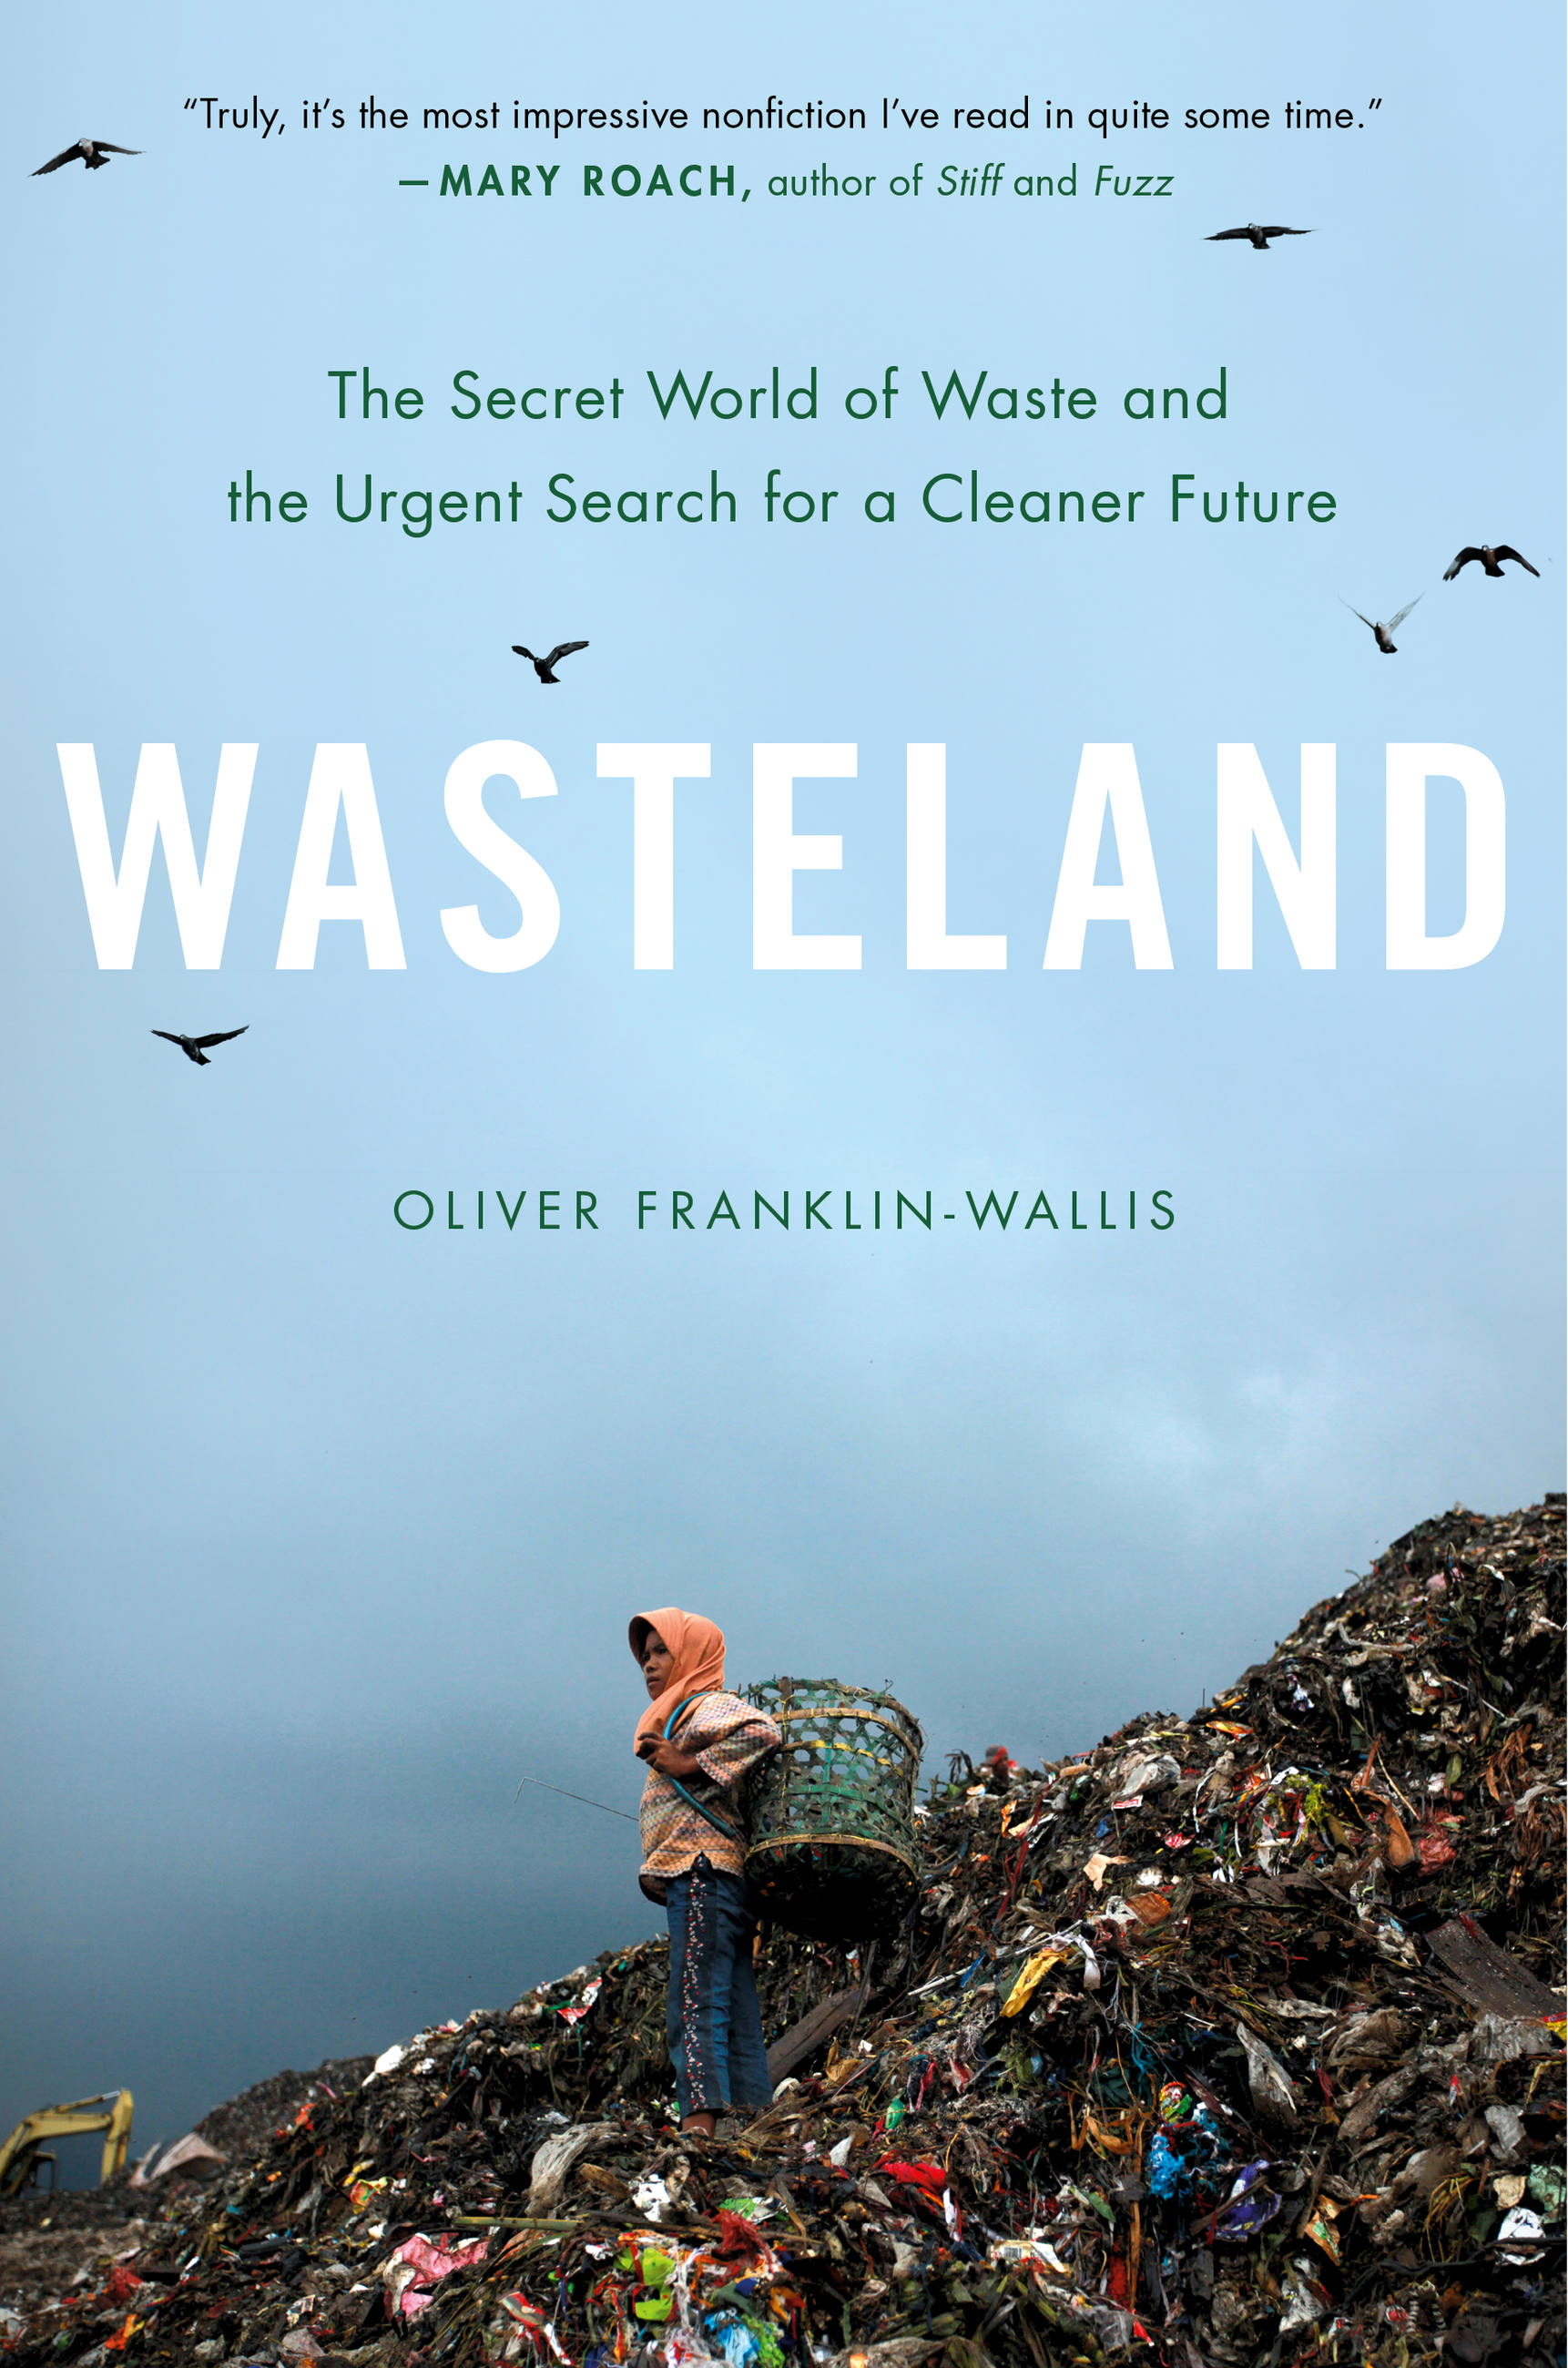 Group　Wasteland　Book　by　Oliver　Franklin-Wallis　Hachette